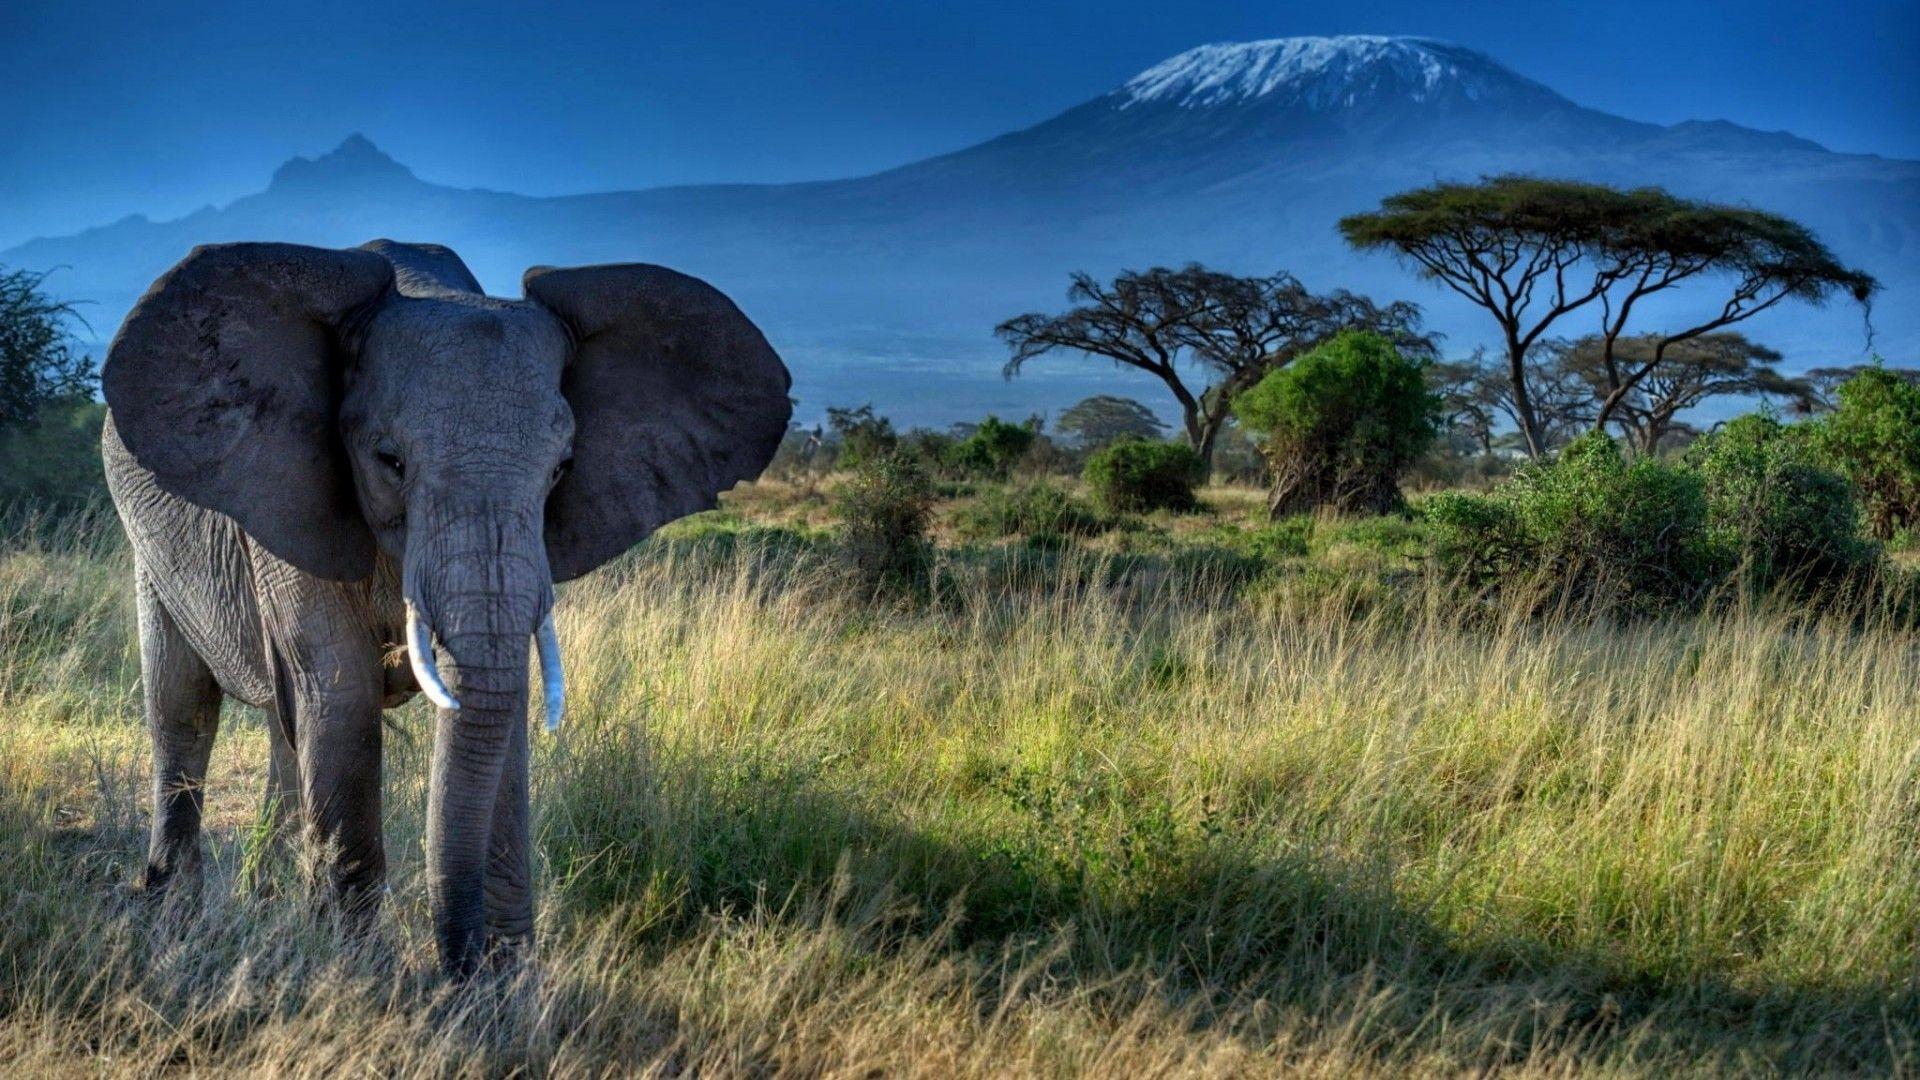 Elephant Dry Grass Trees Mount Kilimanjaro 2K Desk 4K Wallpapers